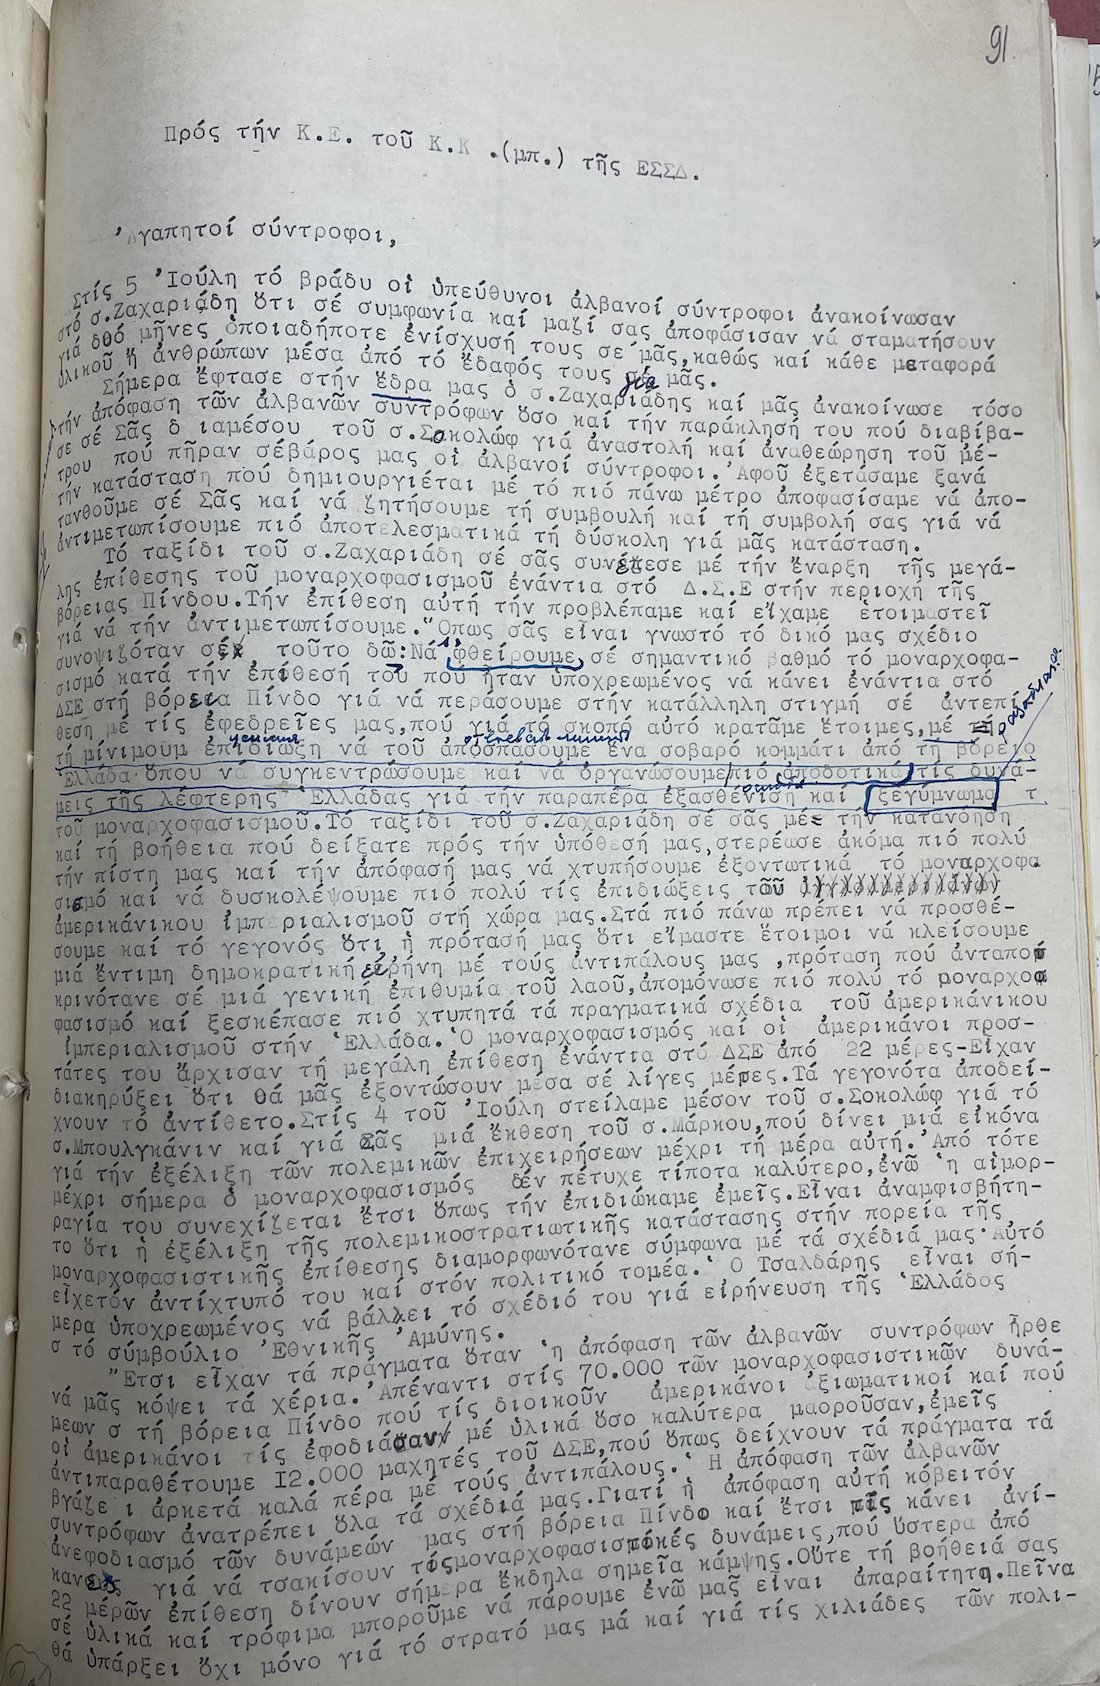 Eπιστολή του Μάρκου Βαφειάδη (Καπετάν Μάρκος) και του γενικού γραμματέα του ΚΚΕ, Νίκου Ζαχαριάδη προς την ηγεσία του Κομμουνιστικού Κόμματος της Σοβιετικής Ένωσης. Η επιστολή έχει ημερομηνία 7 Ιουλίου 1948.